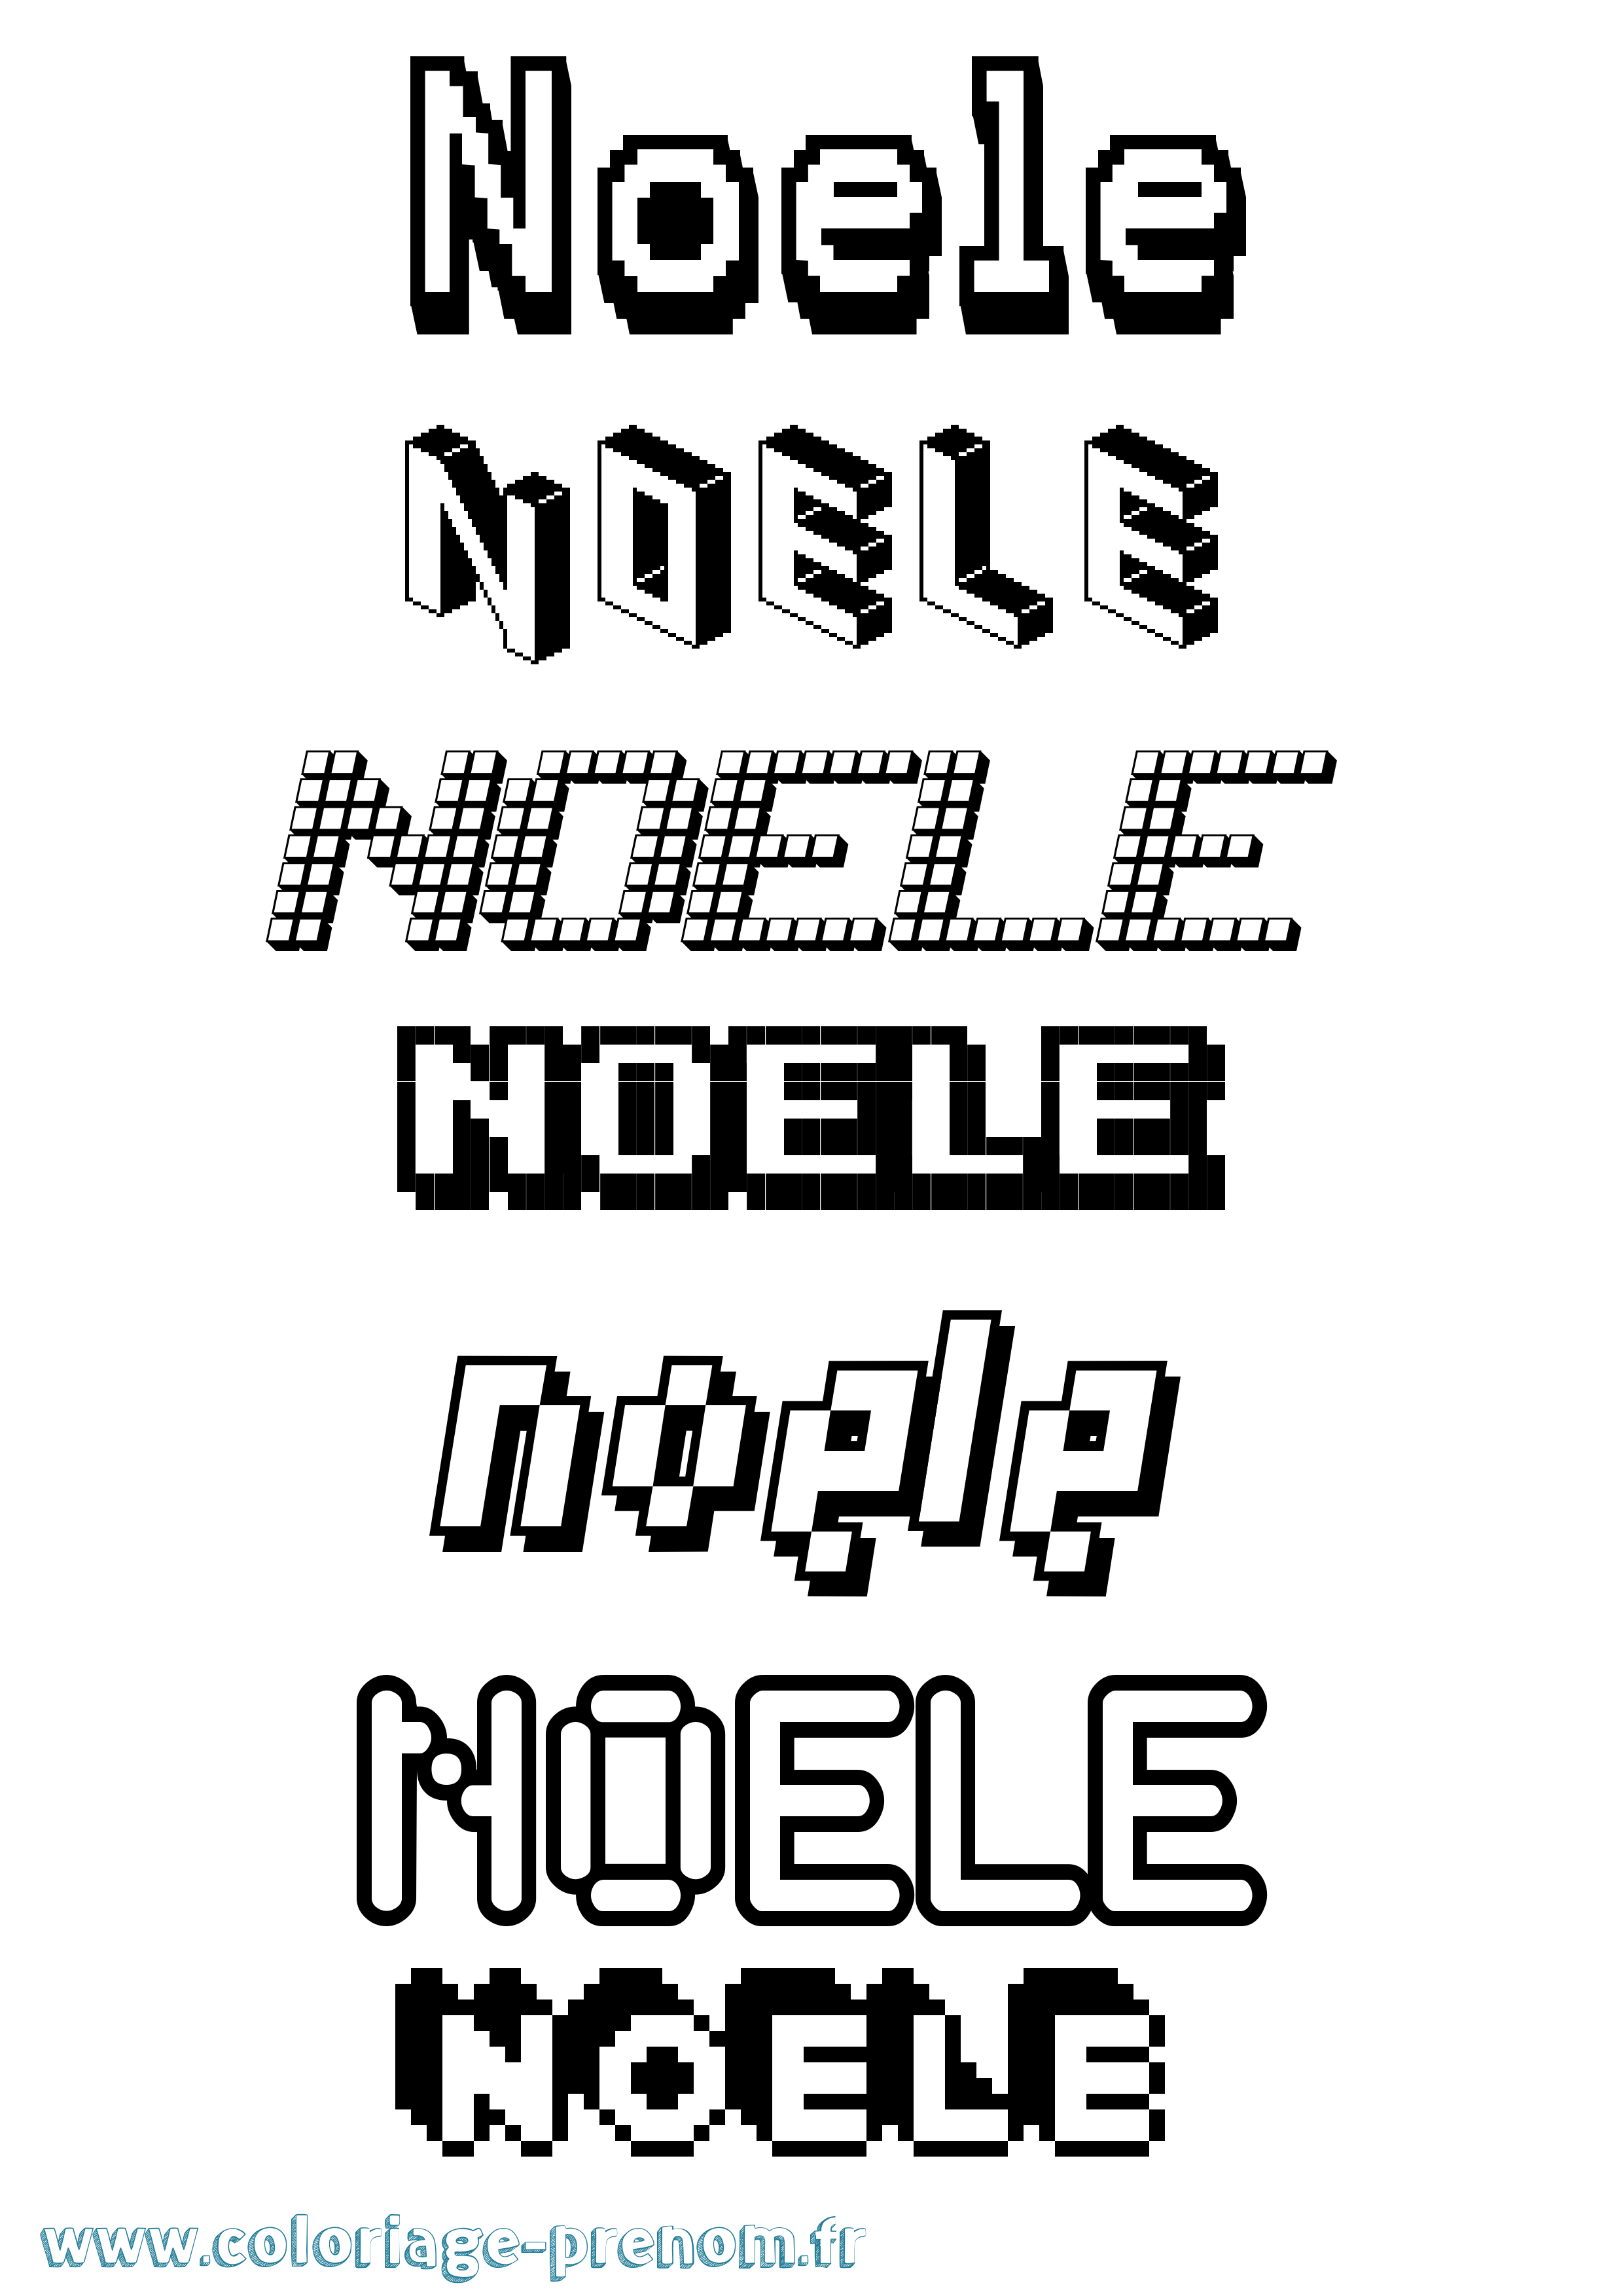 Coloriage prénom Noele Pixel